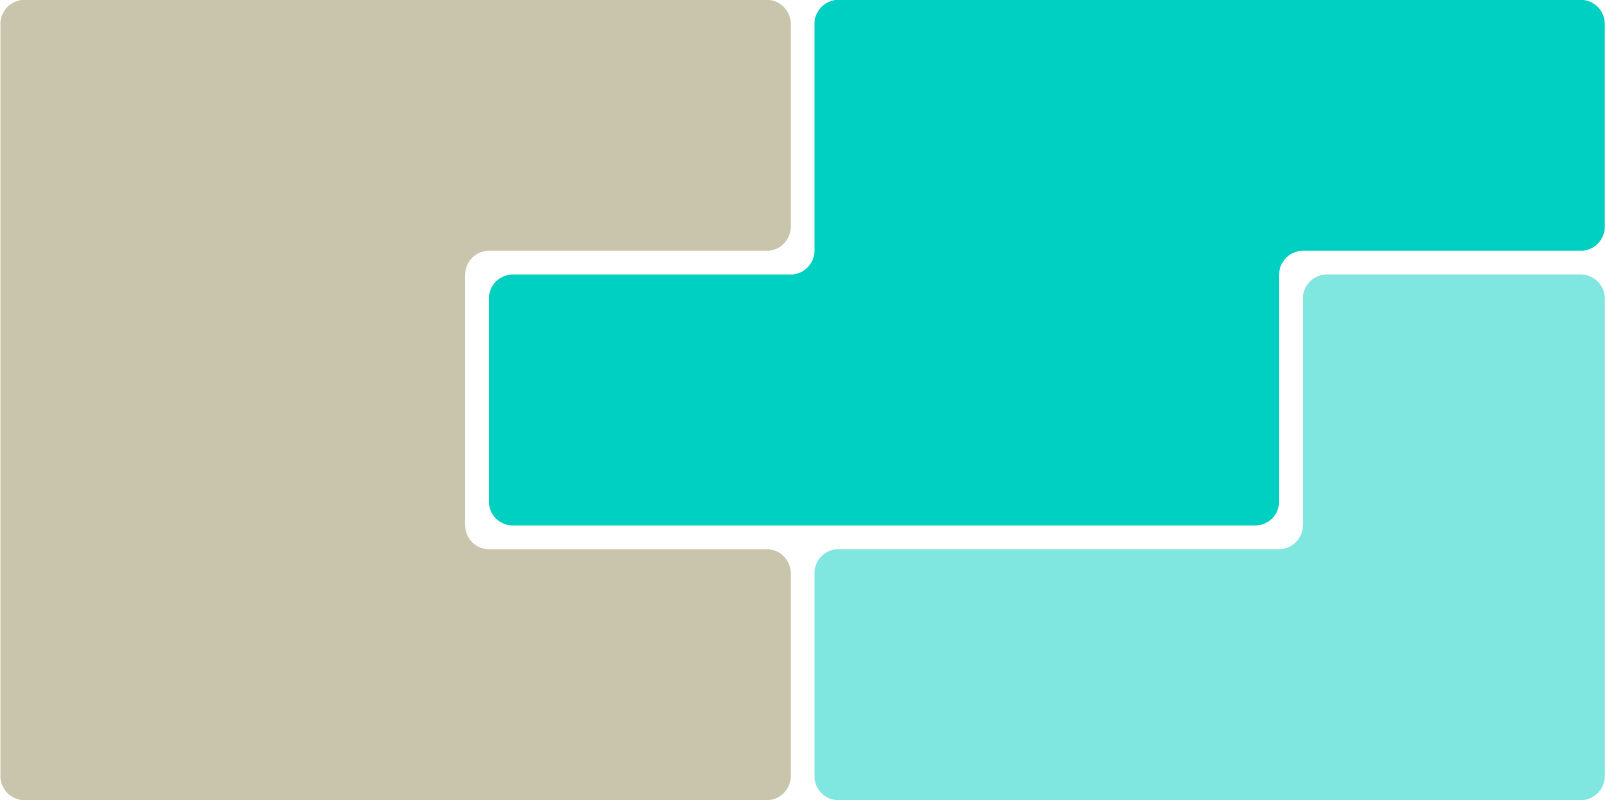 Pattern of blocks.